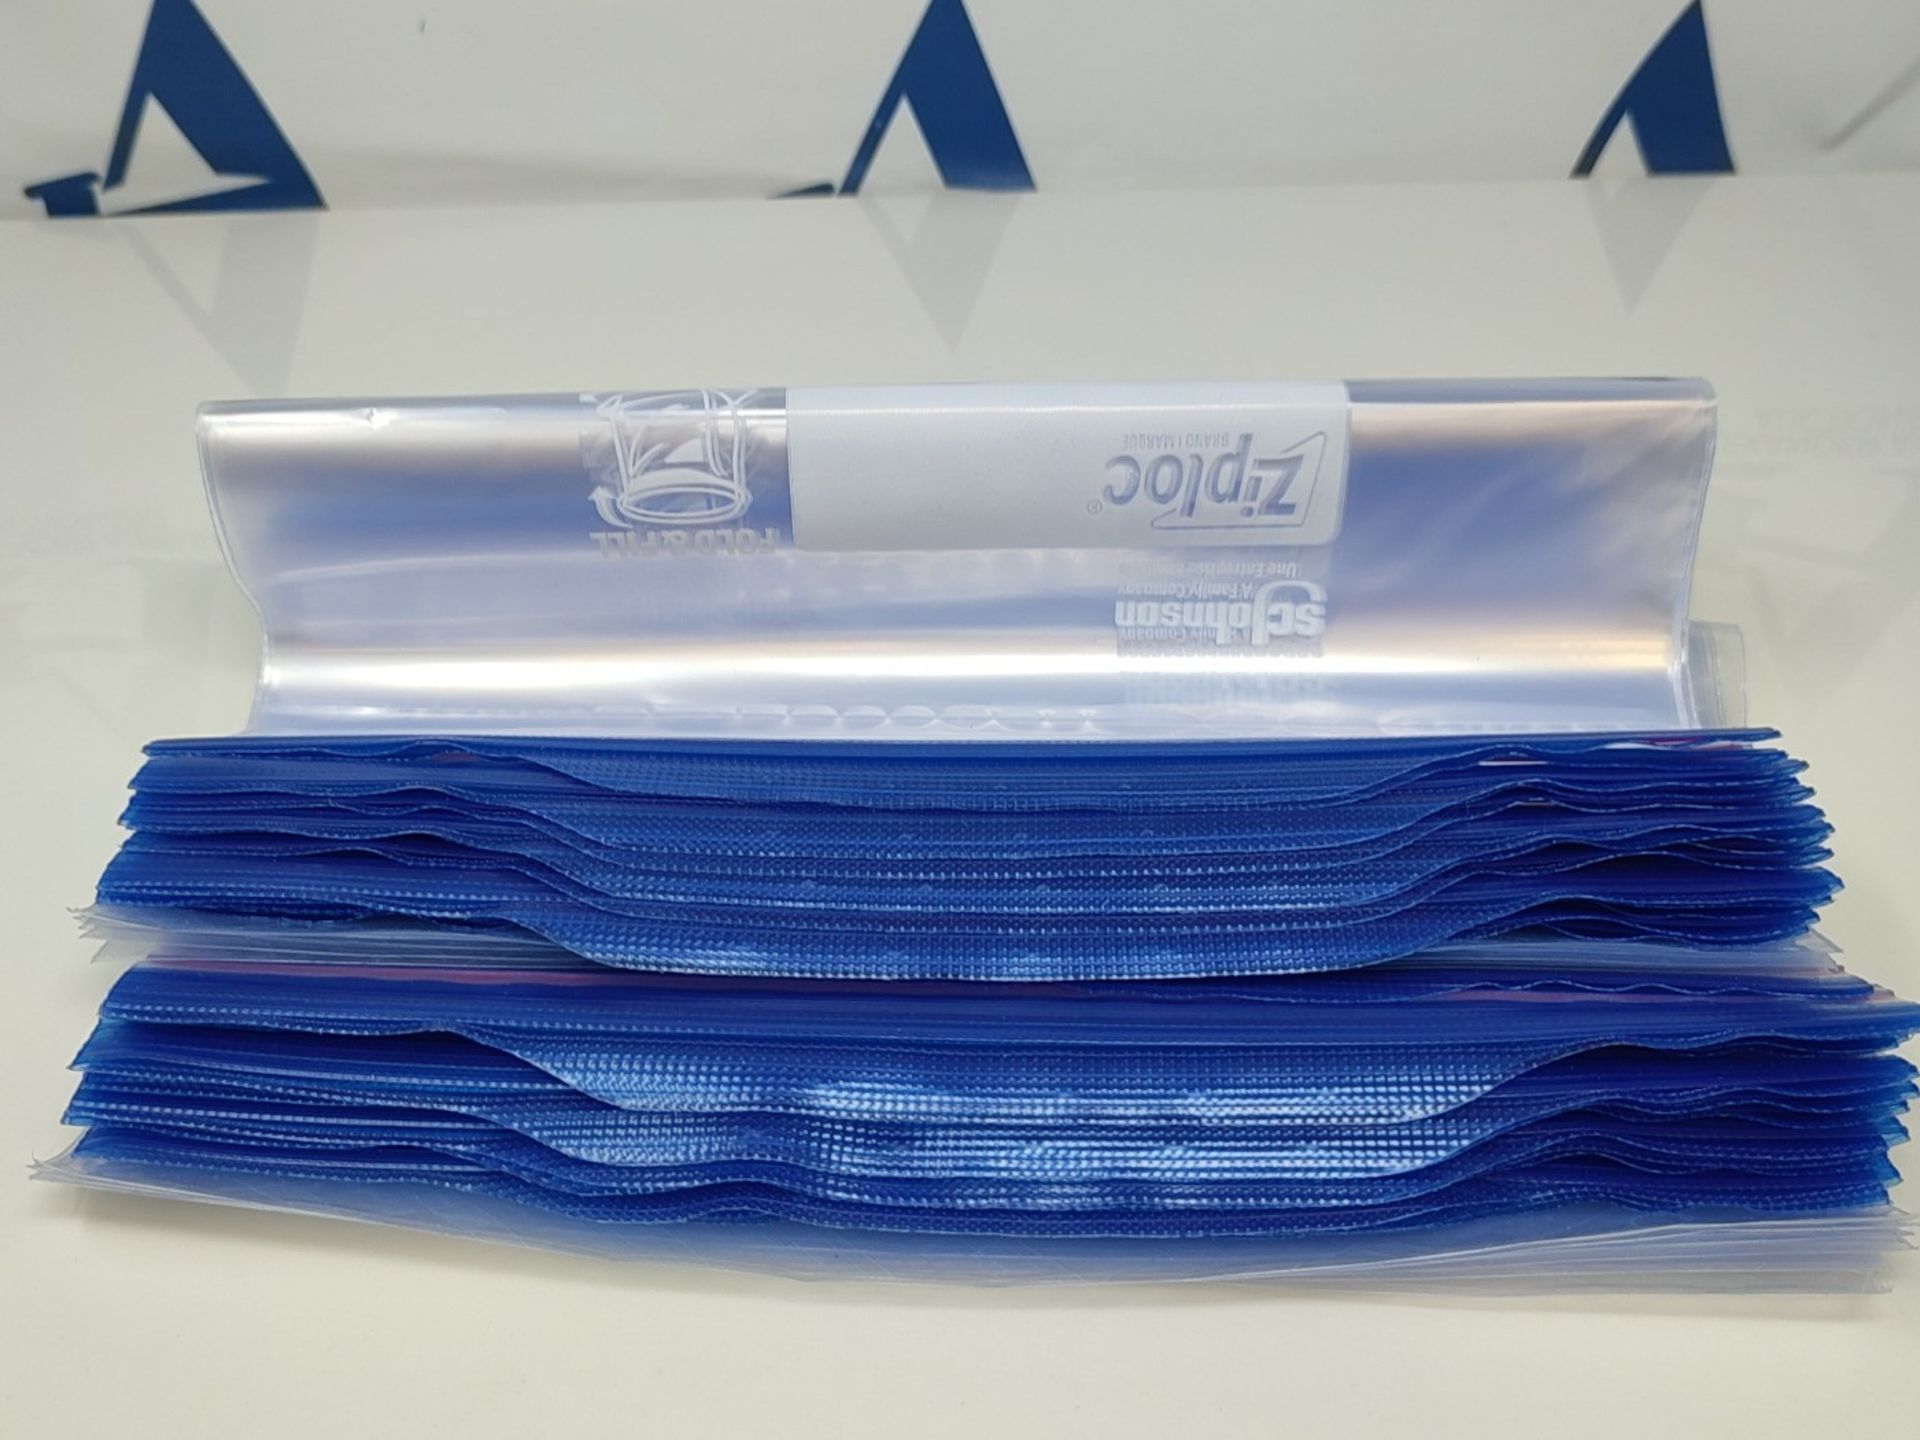 Ziploc Freezer Bag, Gallon Size-28 ct - Image 3 of 3